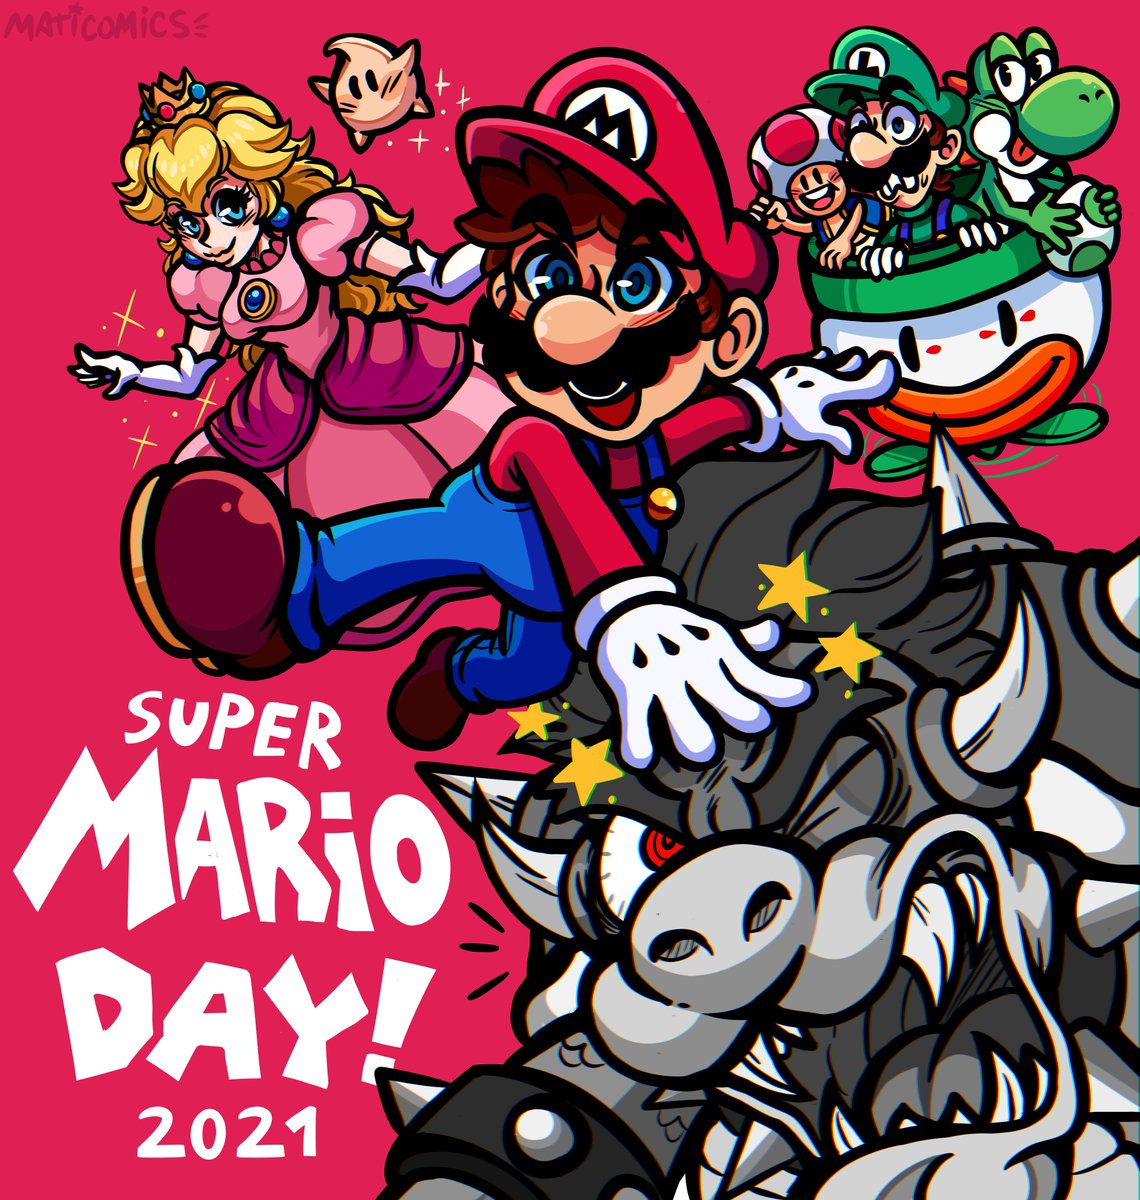 Mario day. День Марио (mar10 Day).